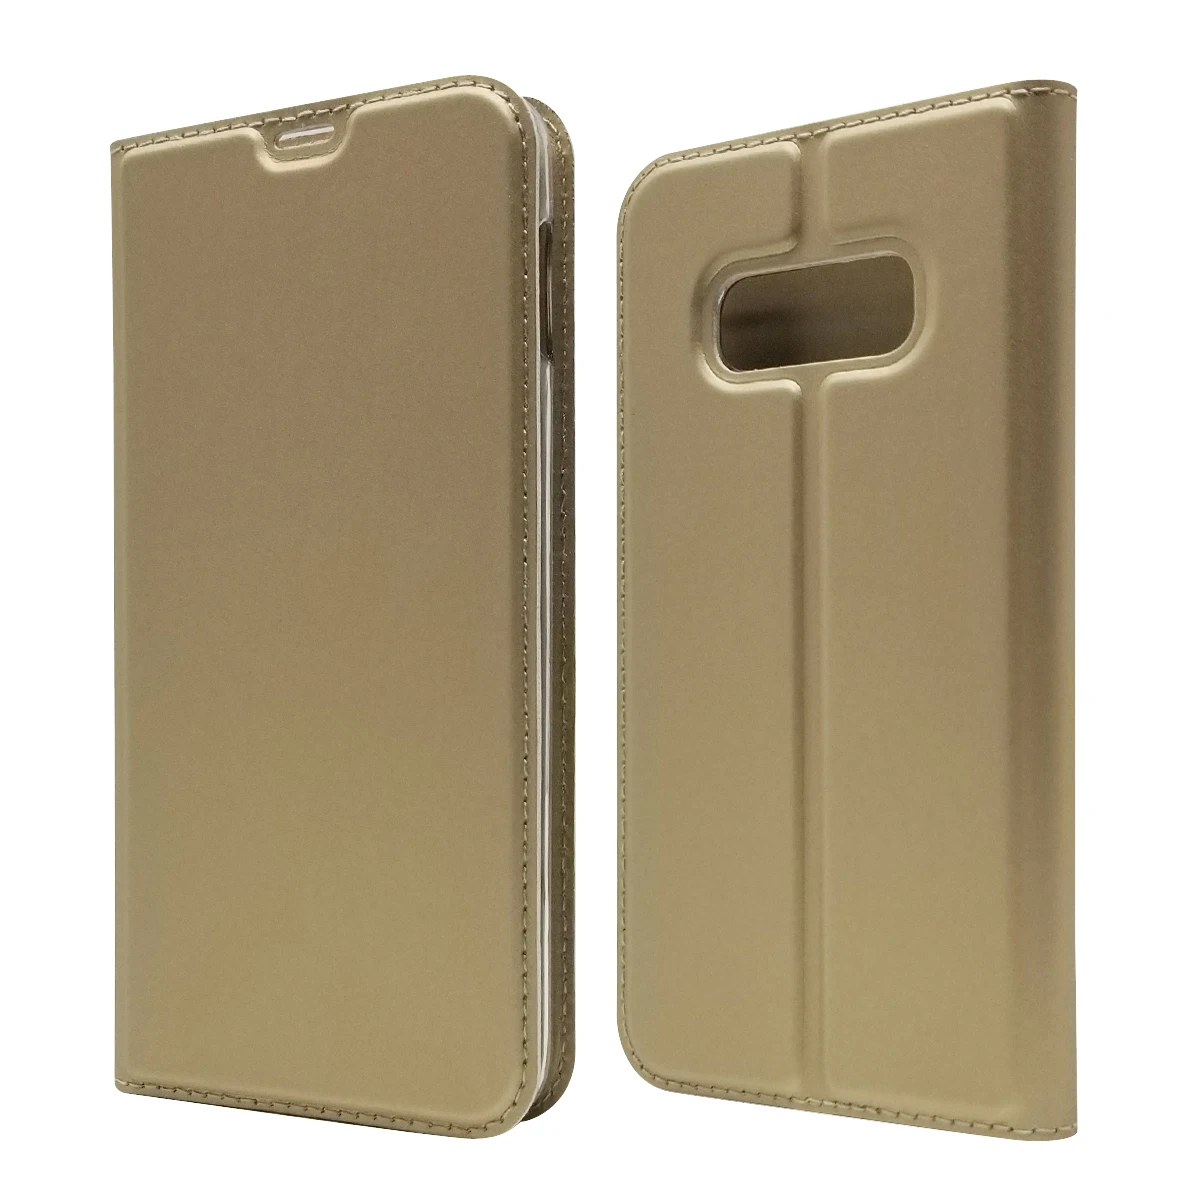 Кожаный чехол-книжка для Redmi Note 6 6A 4X 5A Prime 4 5 Pro Plus 5A S2 sony Xperia Z5 Mini L1 L2 чехлы для телефонов, ПУ - Цвет: 3